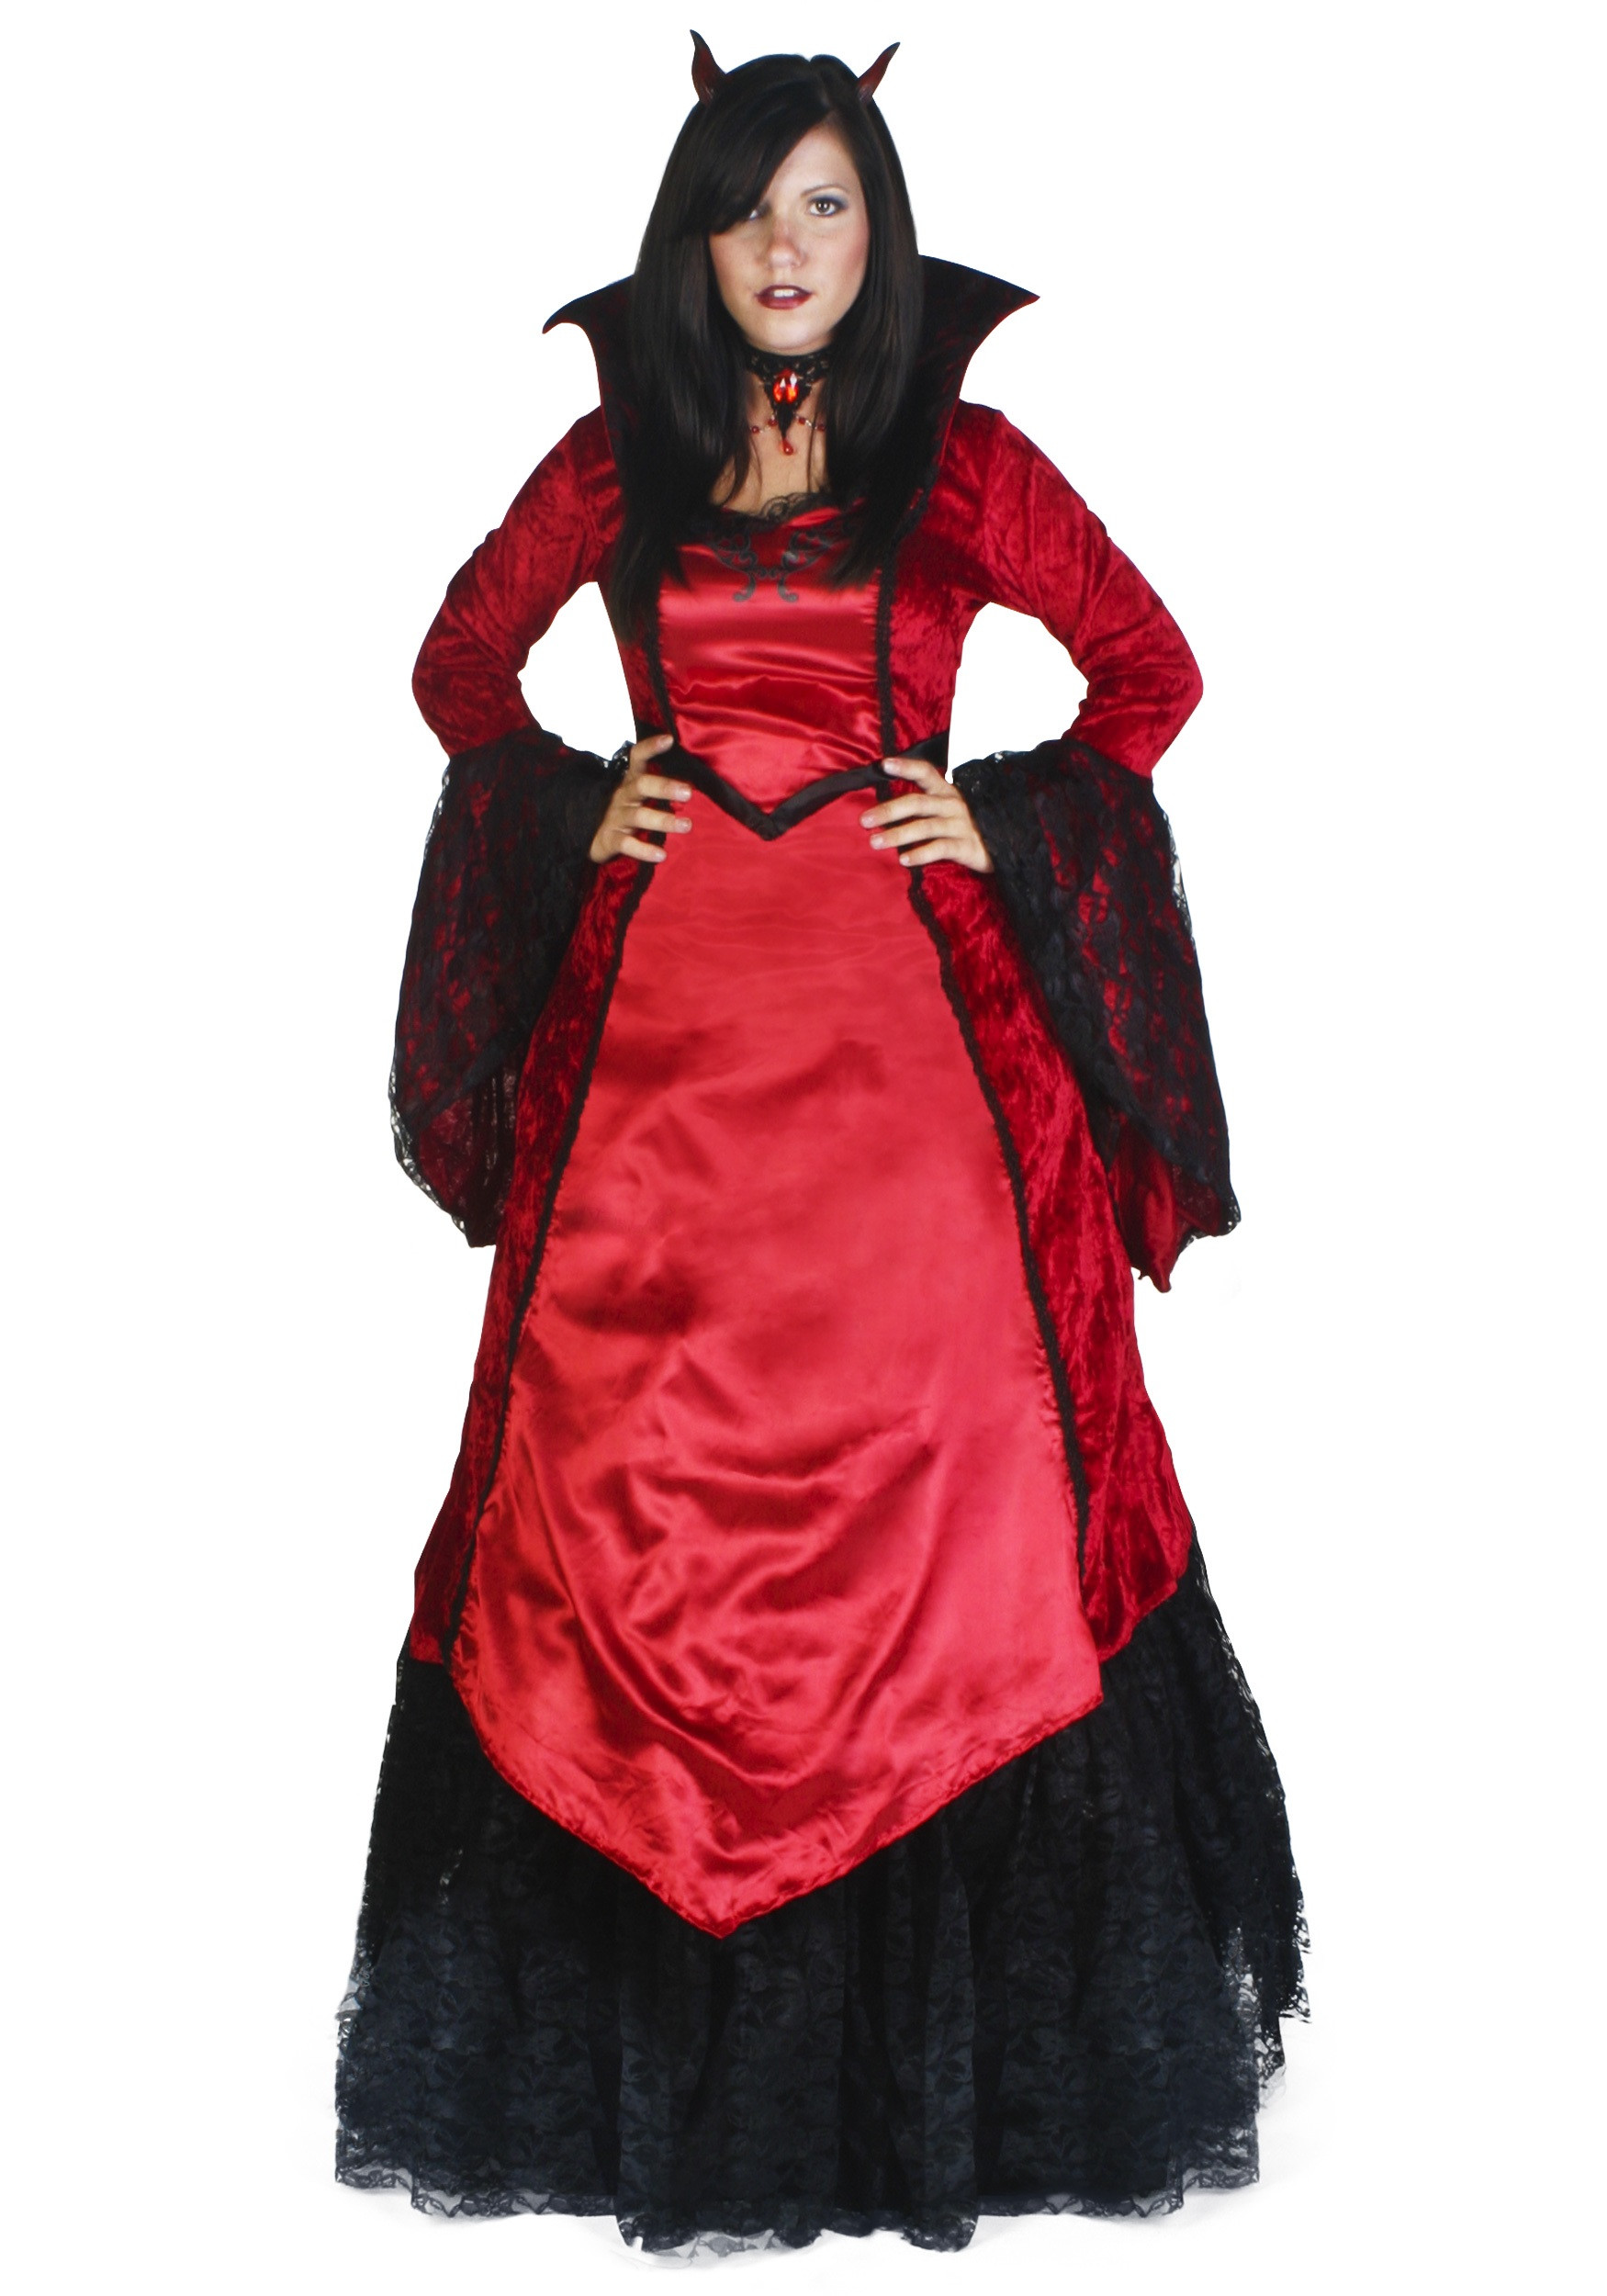 Devil Halloween Costumes Ideas
 Deluxe Devil Temptress Dress Womens Devil Halloween Costumes